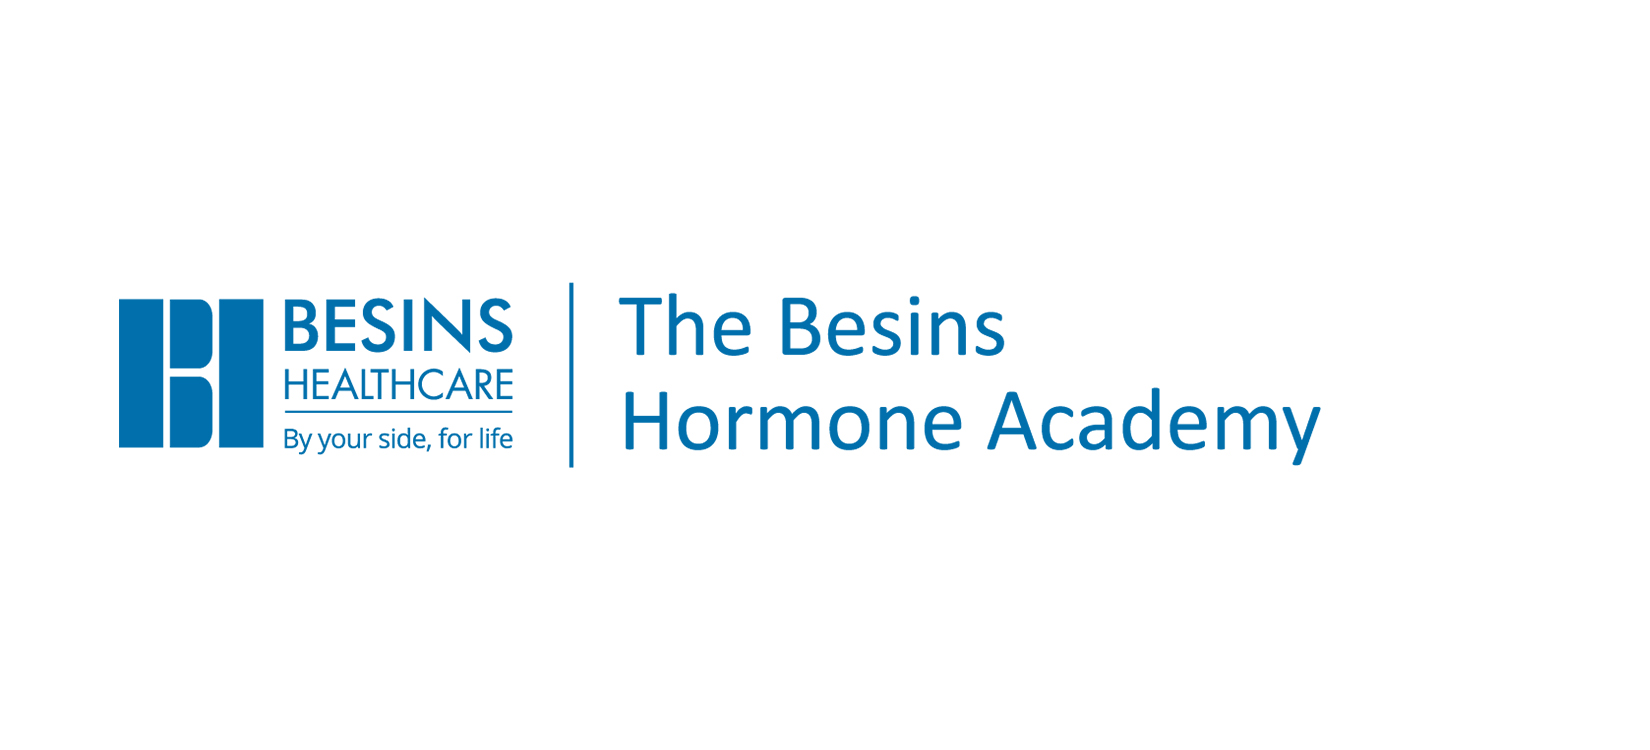 The Besins Hormone Academy